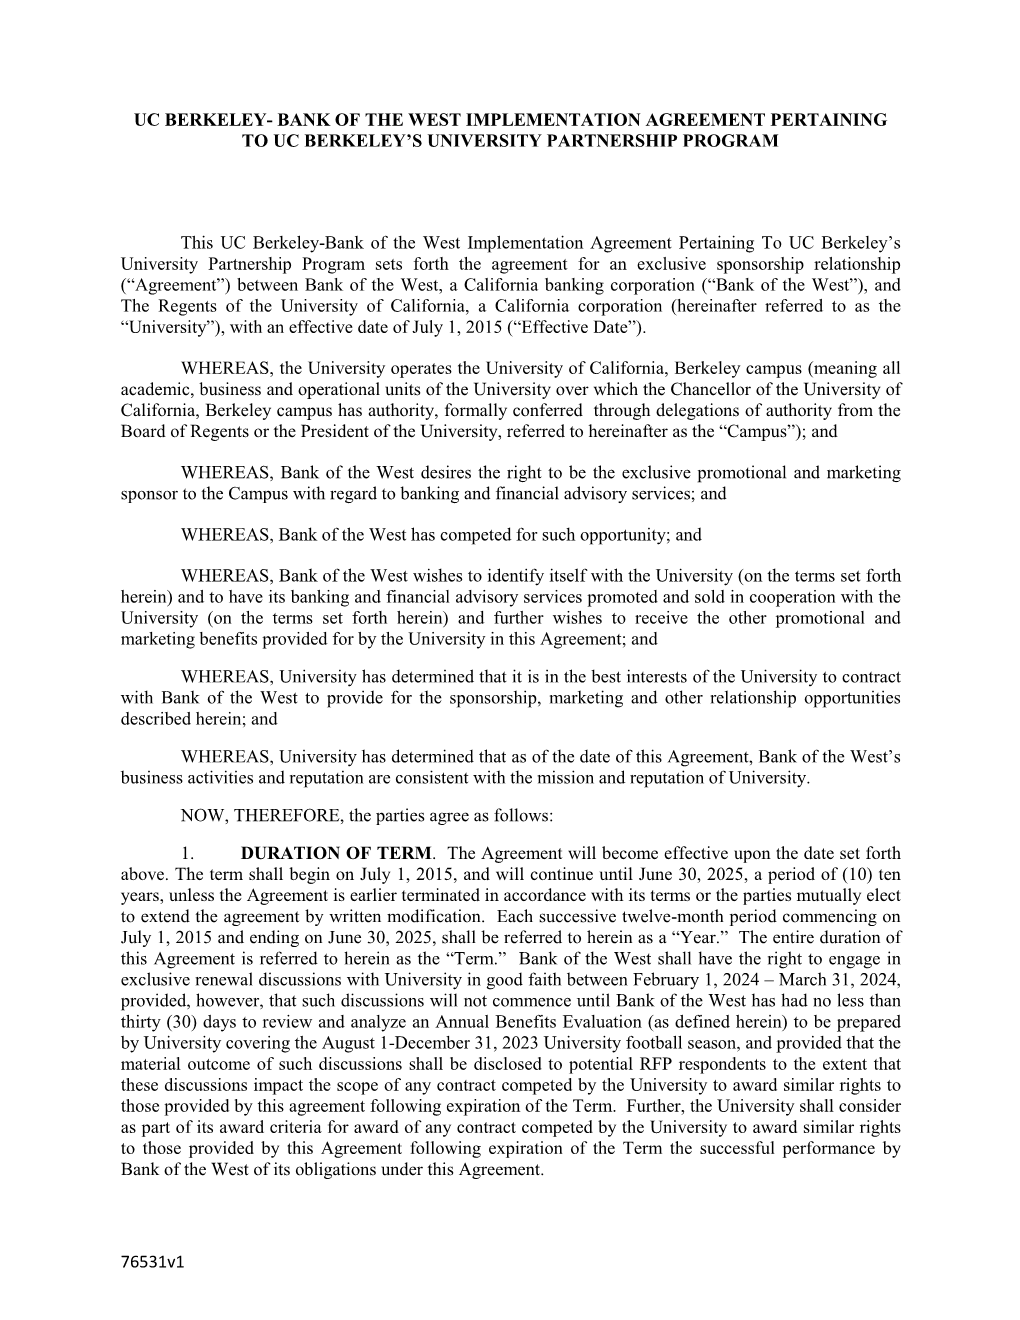 Uc Berkeley- Bank of the West Implementation Agreement Pertaining to Uc Berkeley’S University Partnership Program